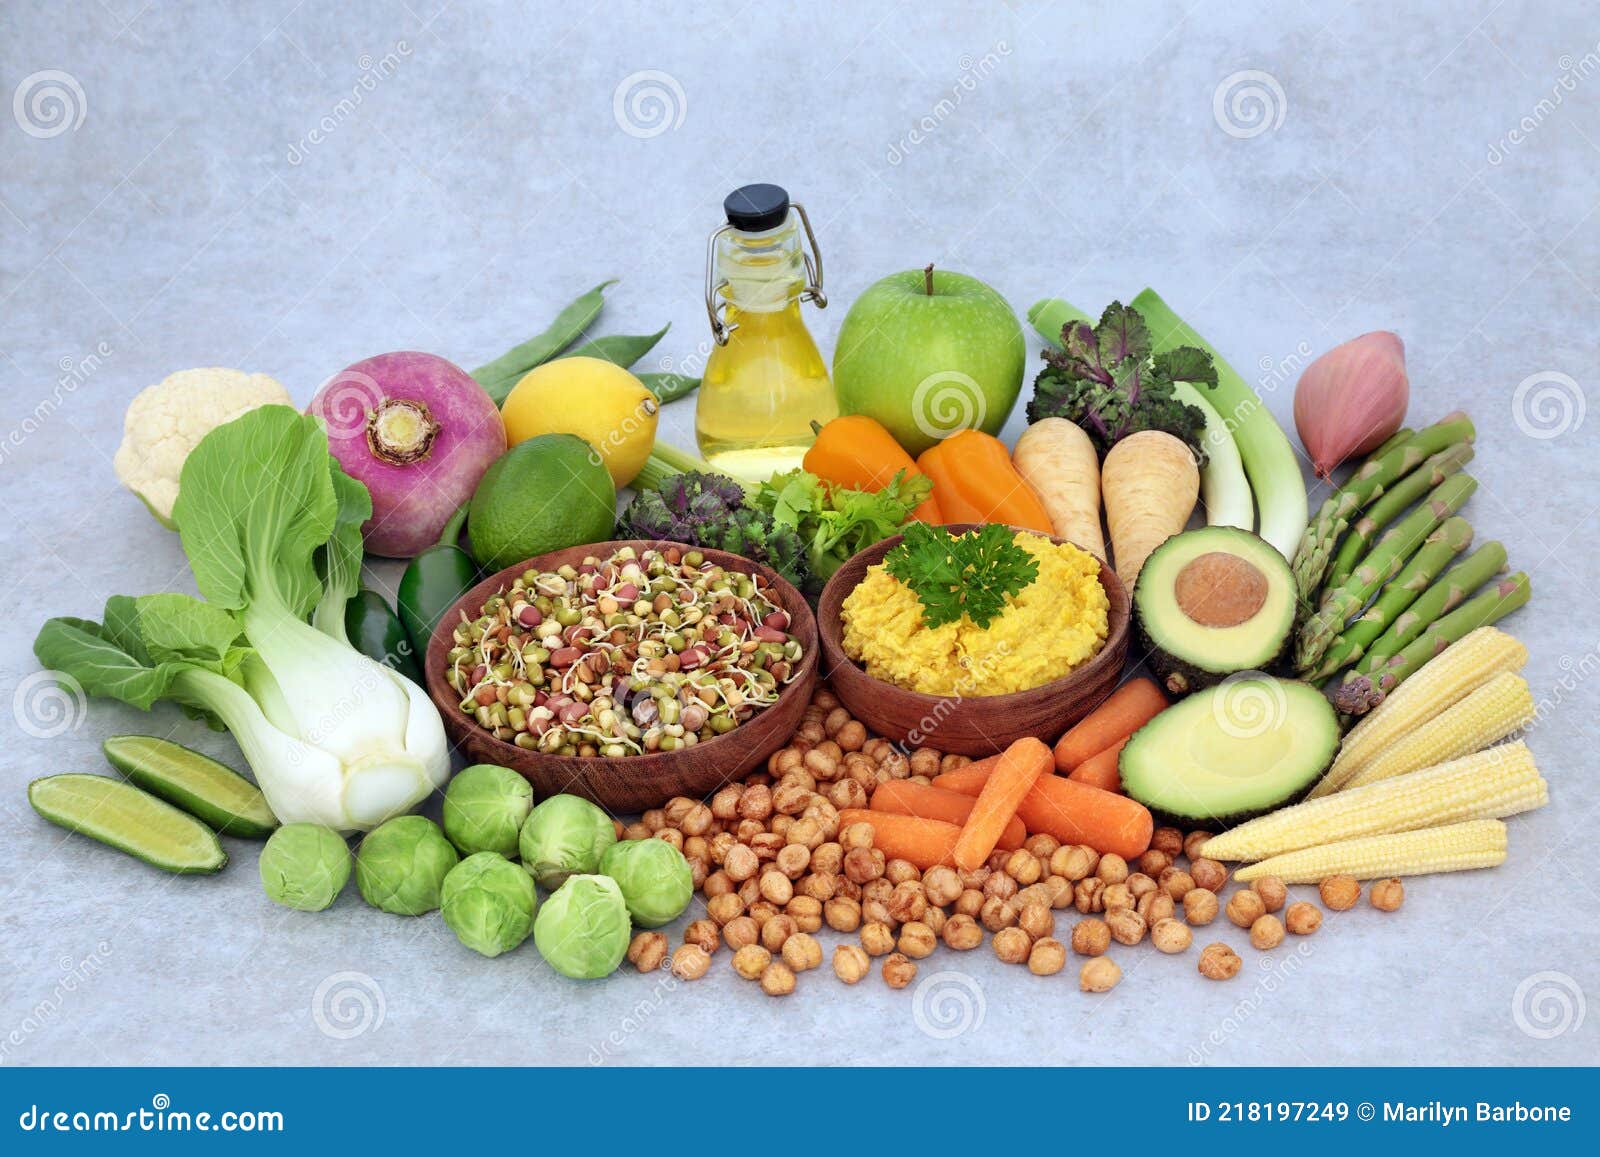 immune boosting plant based vegan health food